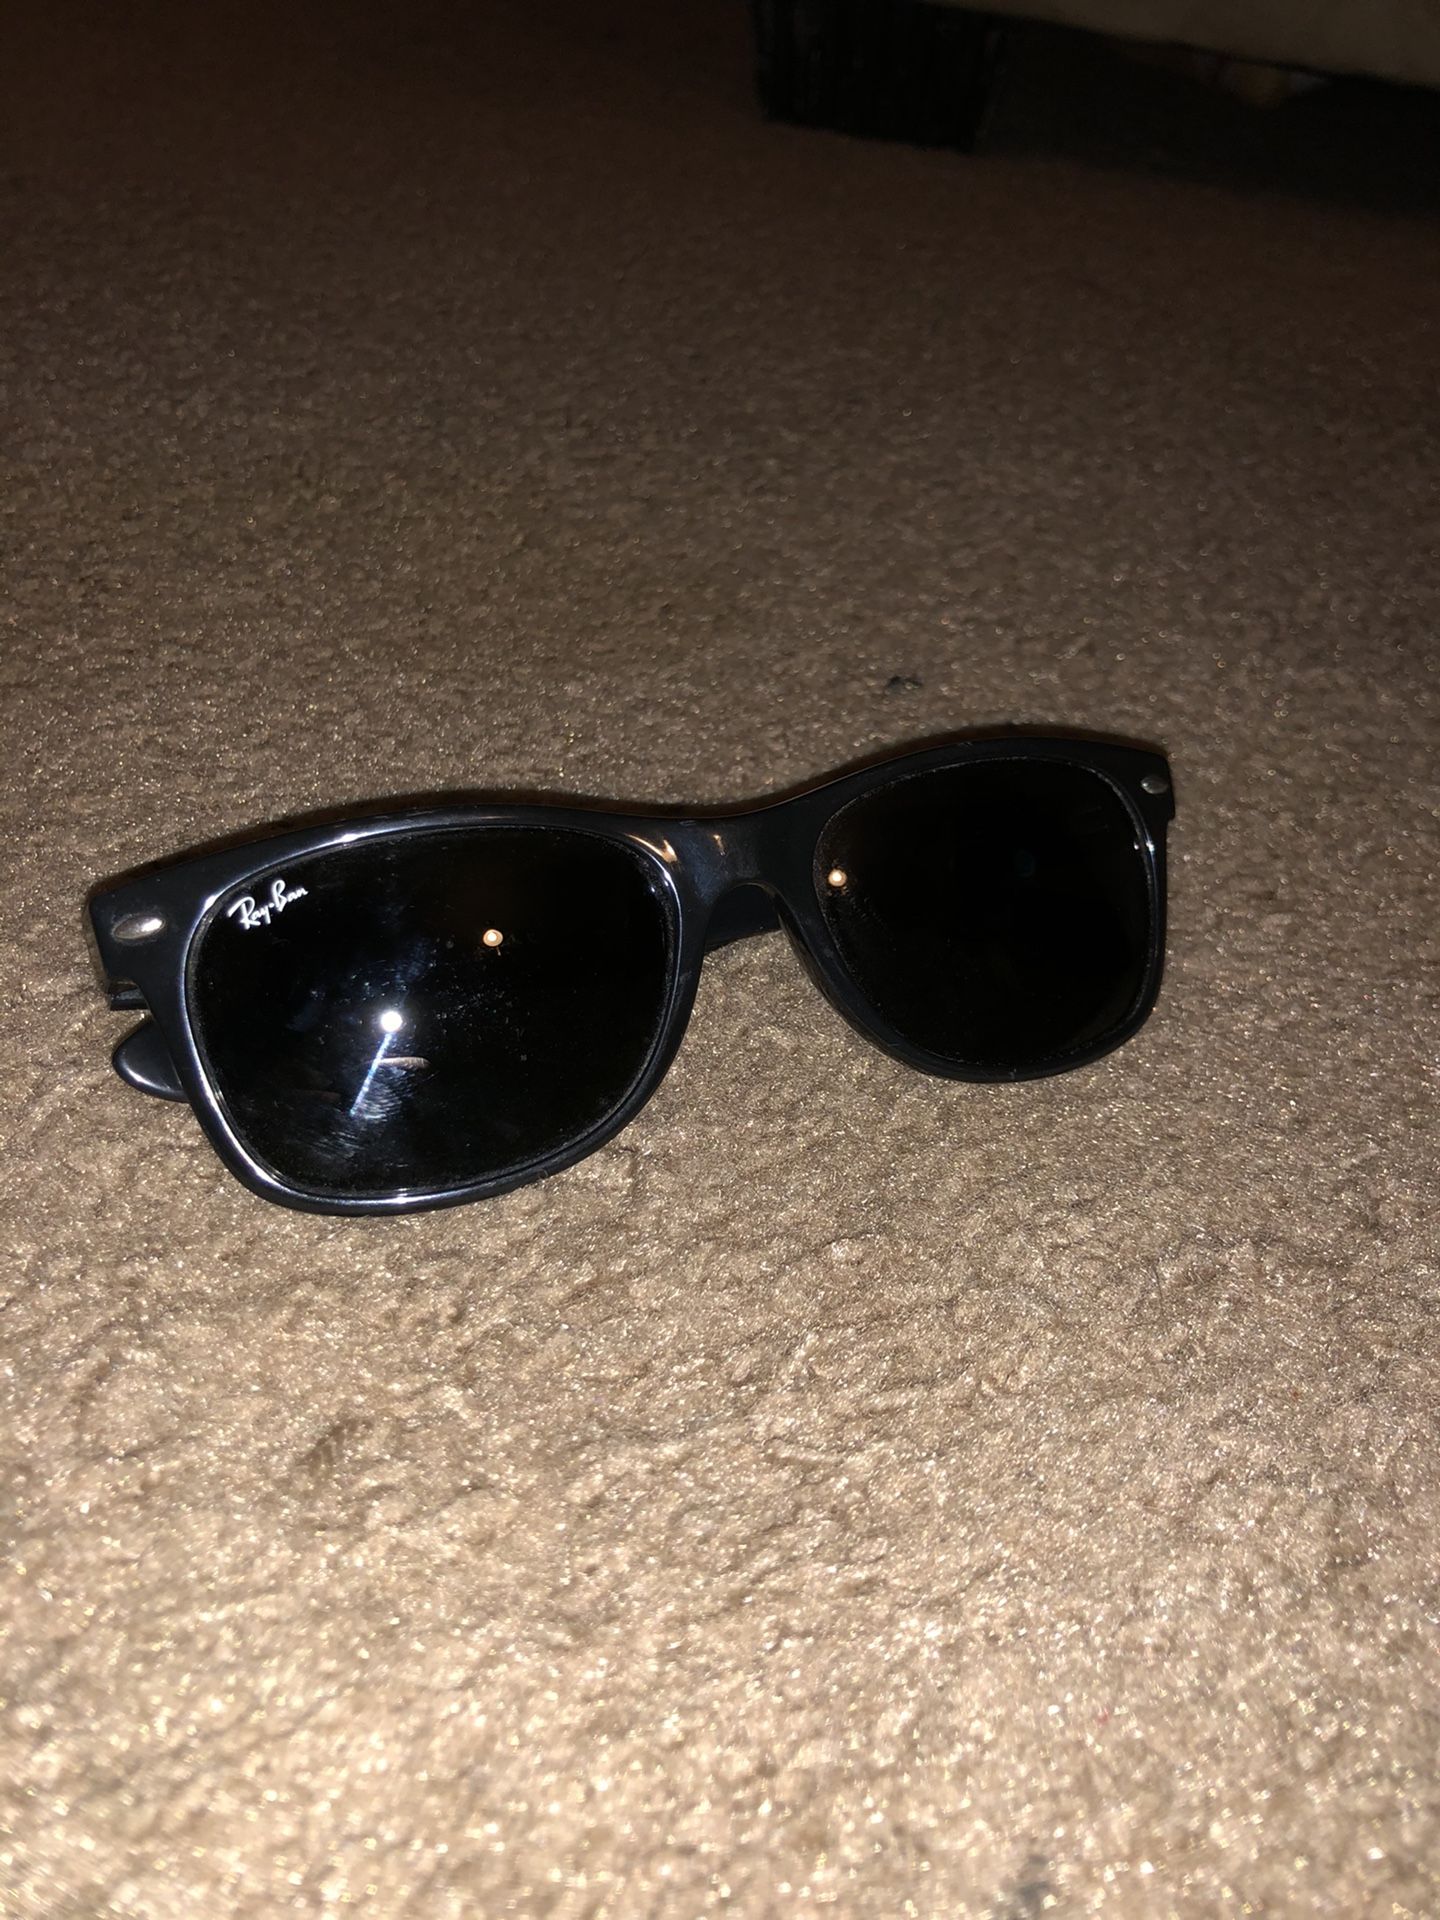 Genuine Ray Ban sunglasses